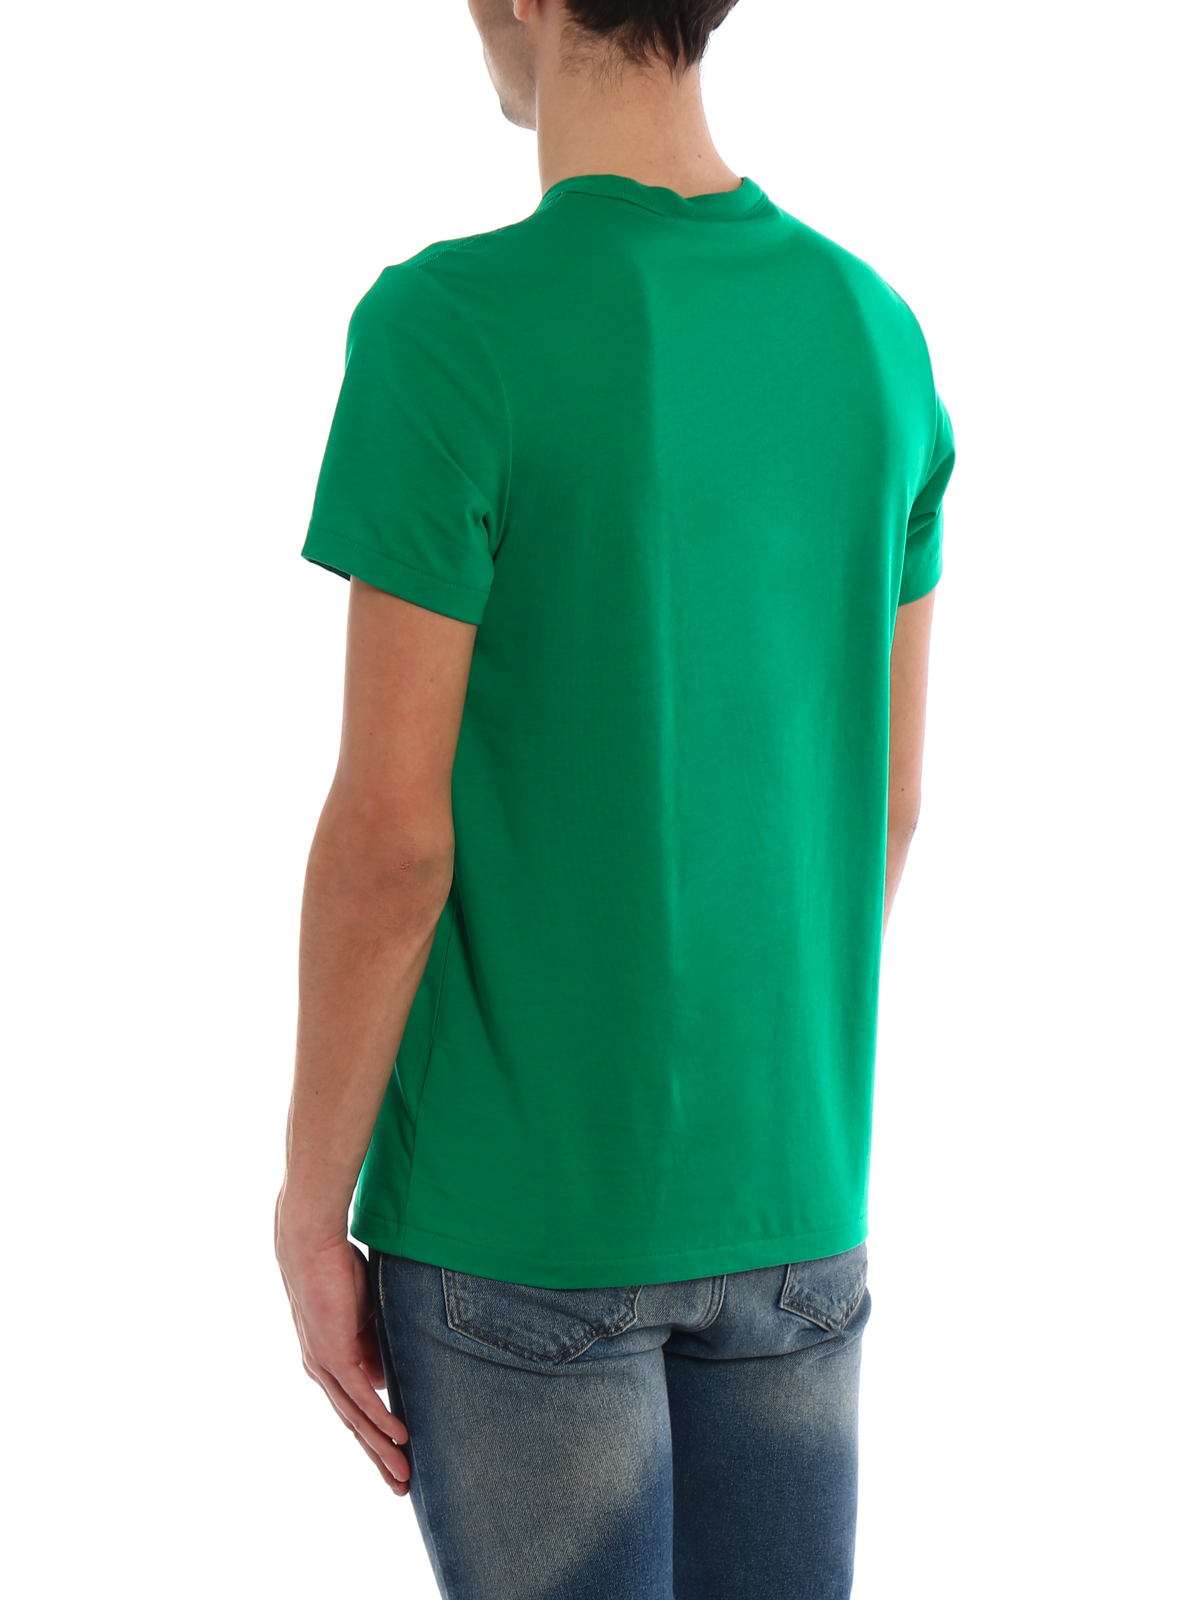 T-shirts Burberry - Henton green jersey T-shirt - 4068576 